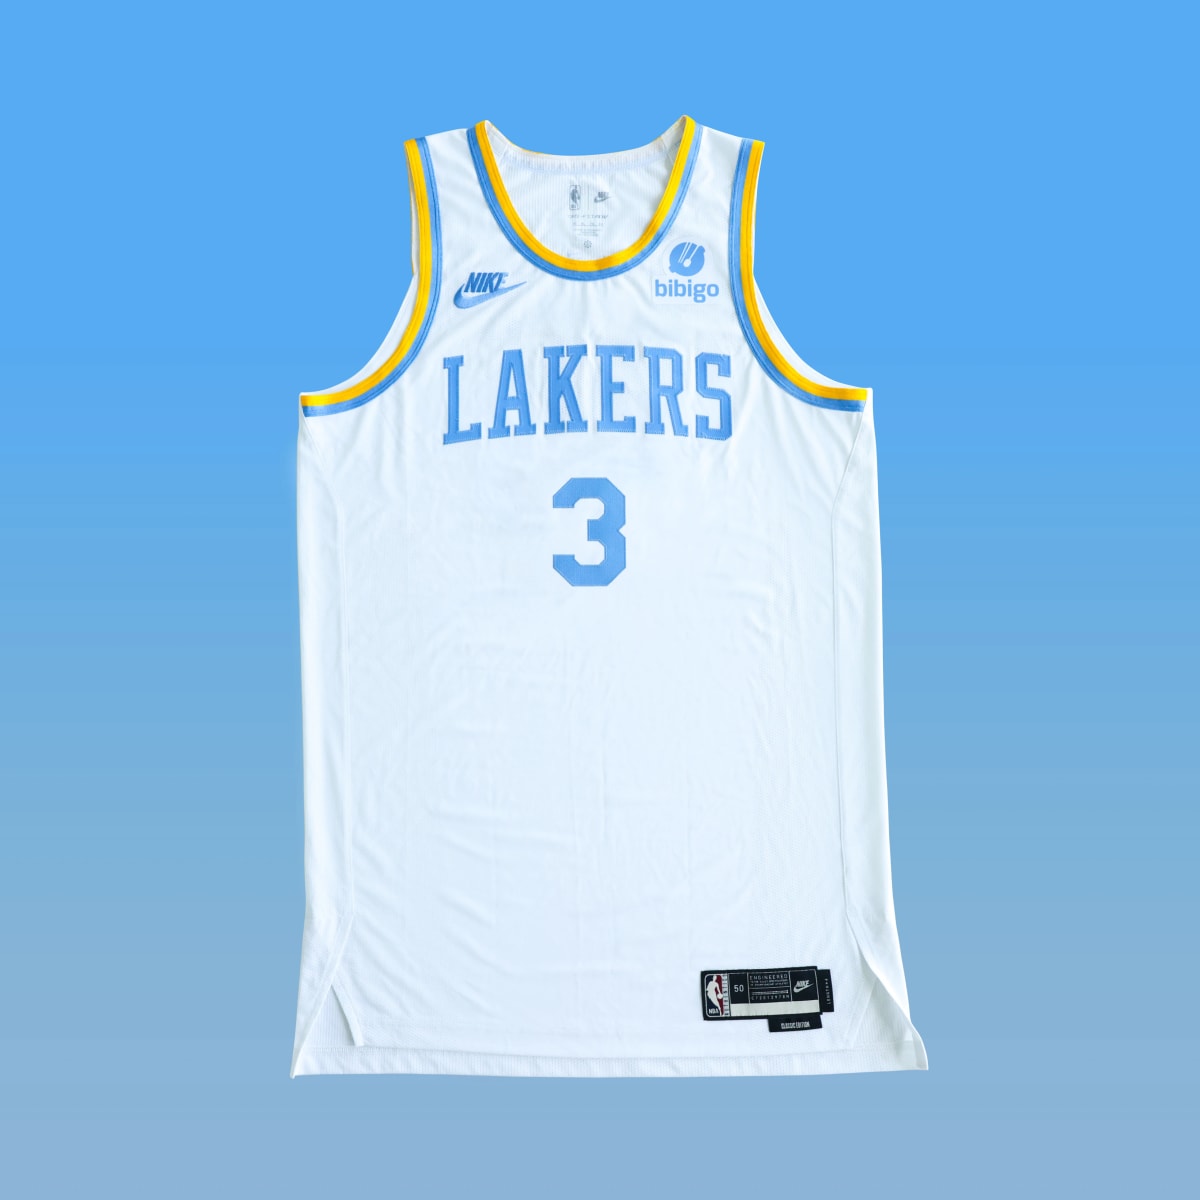 Minneapolis Lakers Uniform Numbers